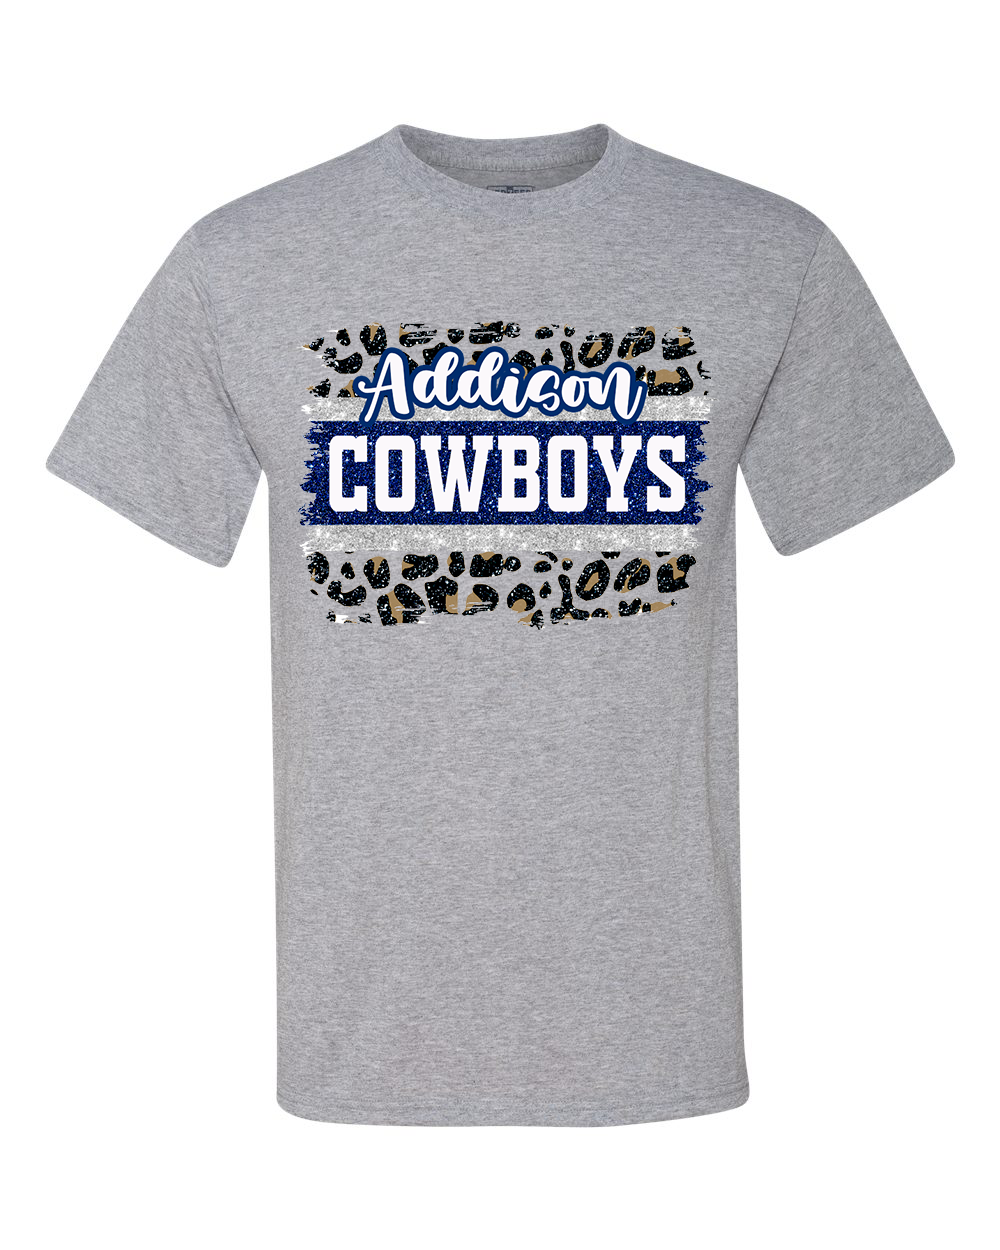 Addison Cowboys Cheetah - T-shirt - ADULT